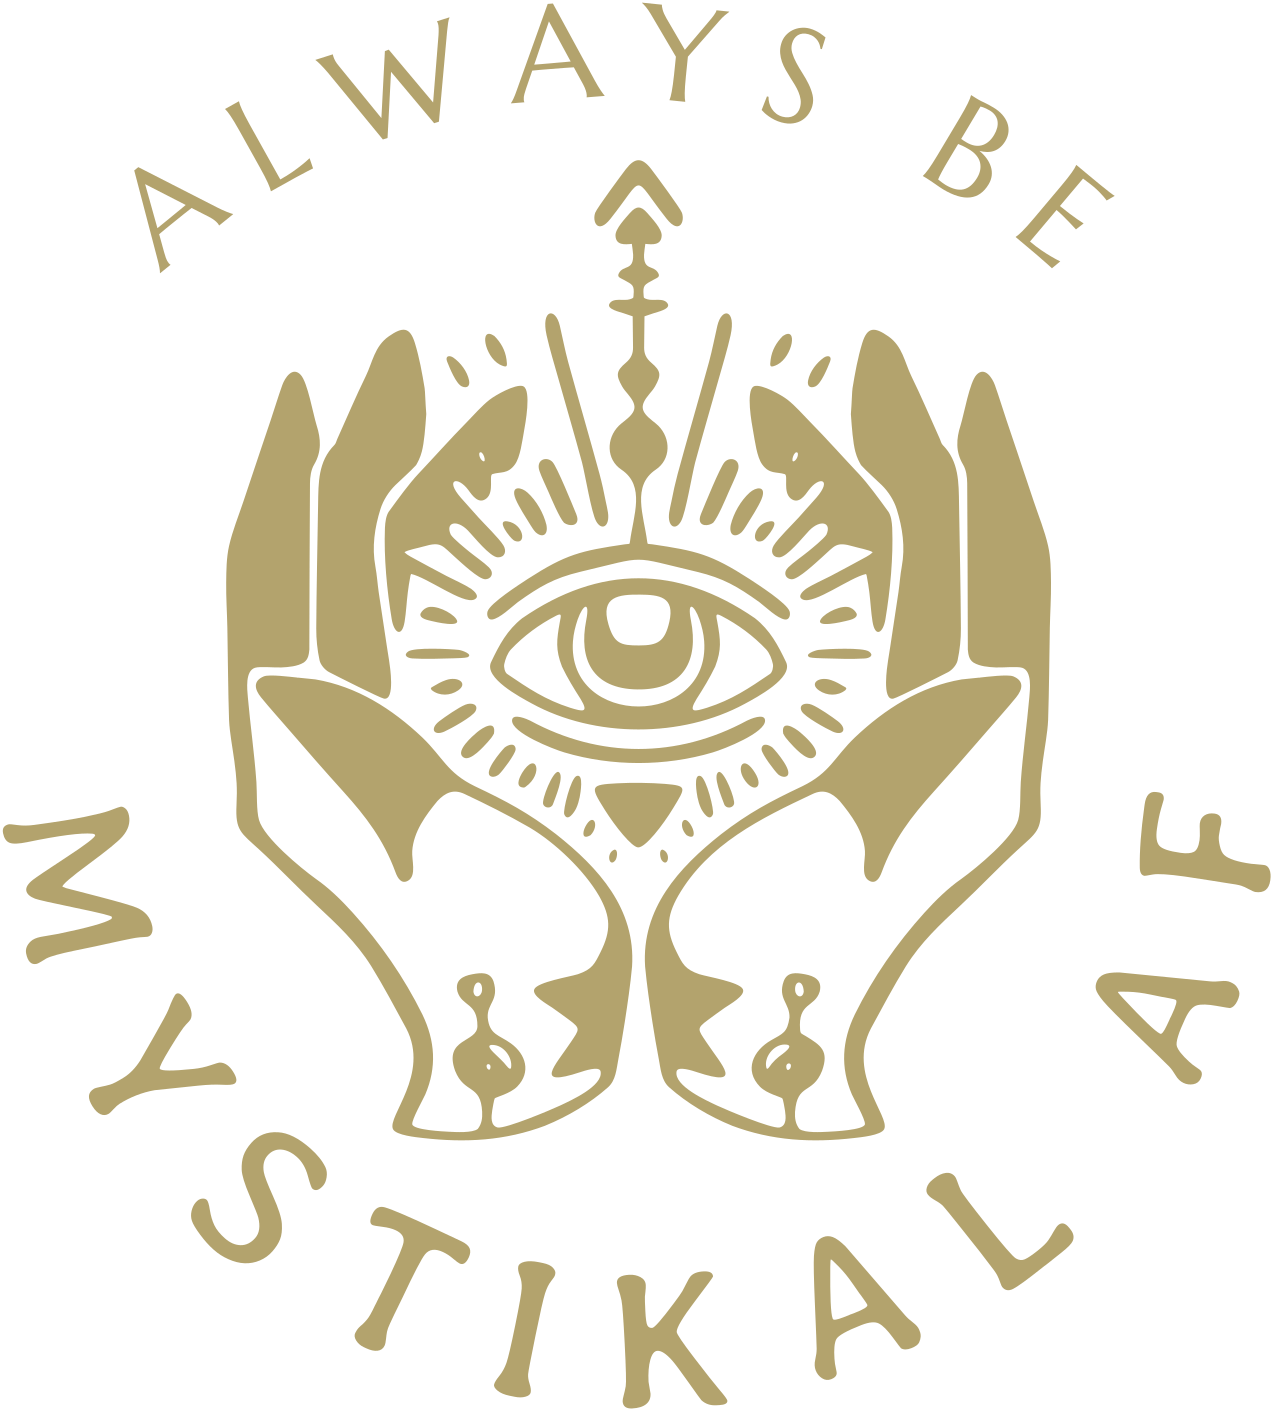 MYSTIKAL AF's web page